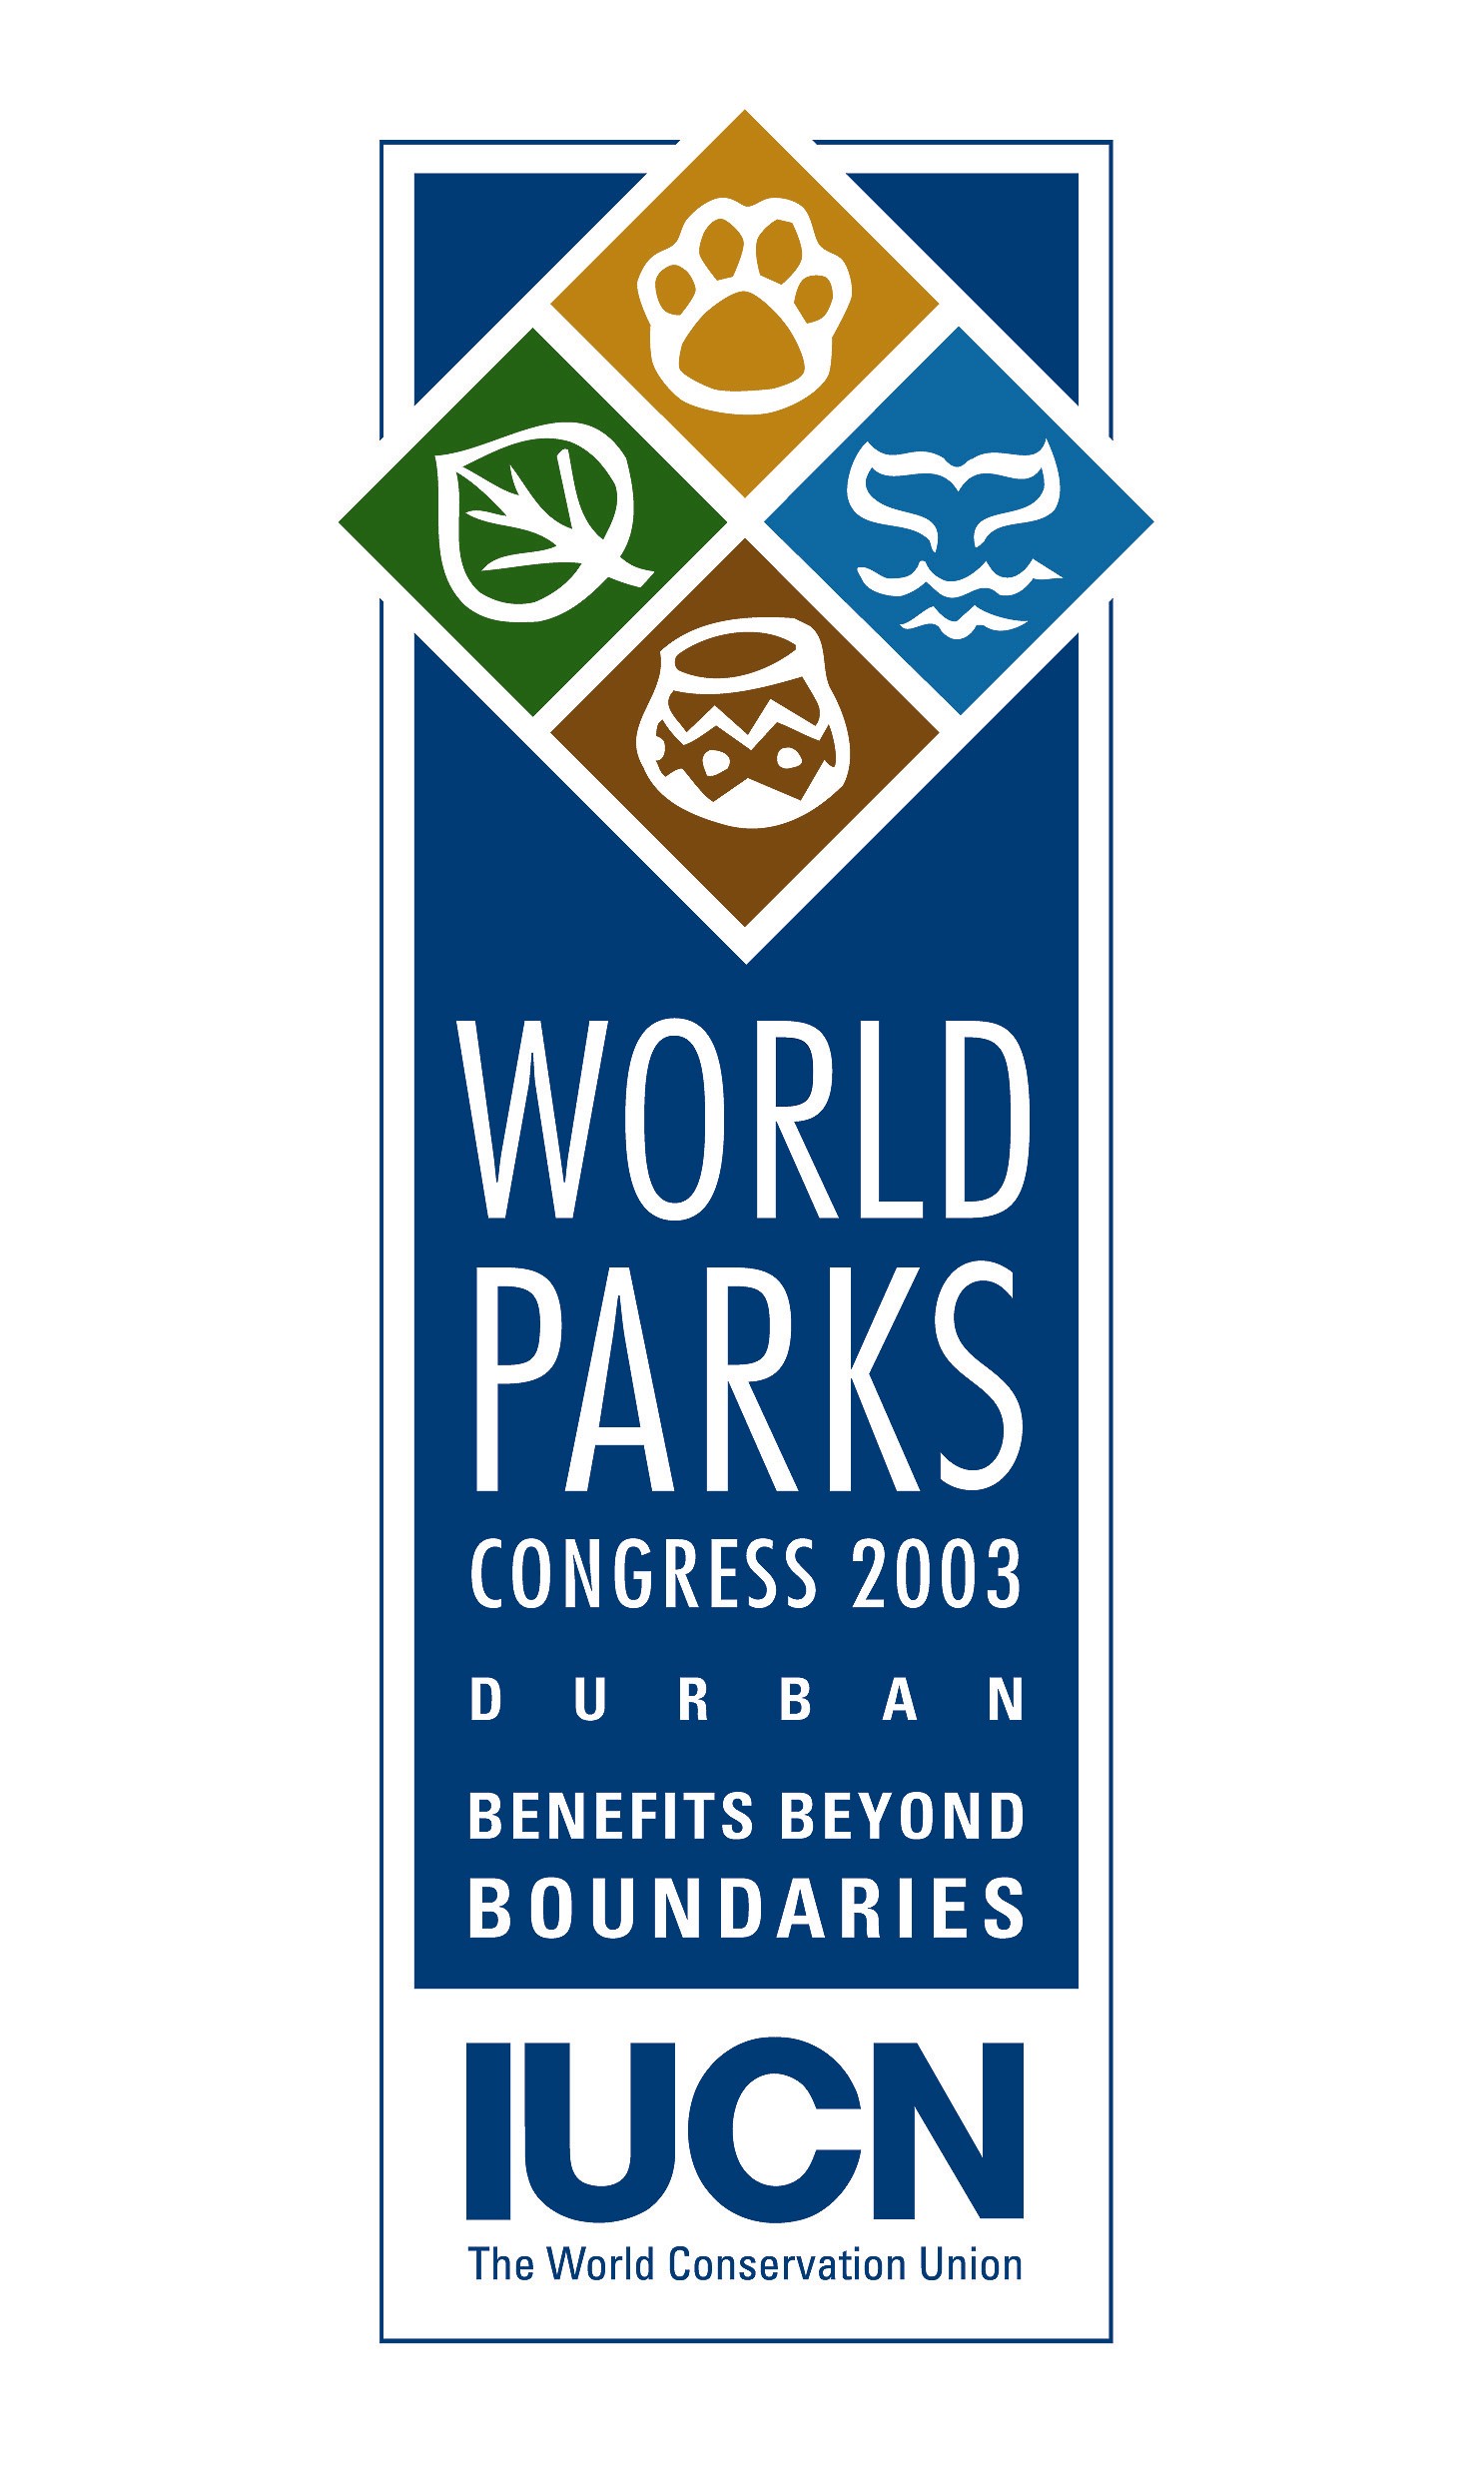 Vth IUCN World Parks Congress Logo